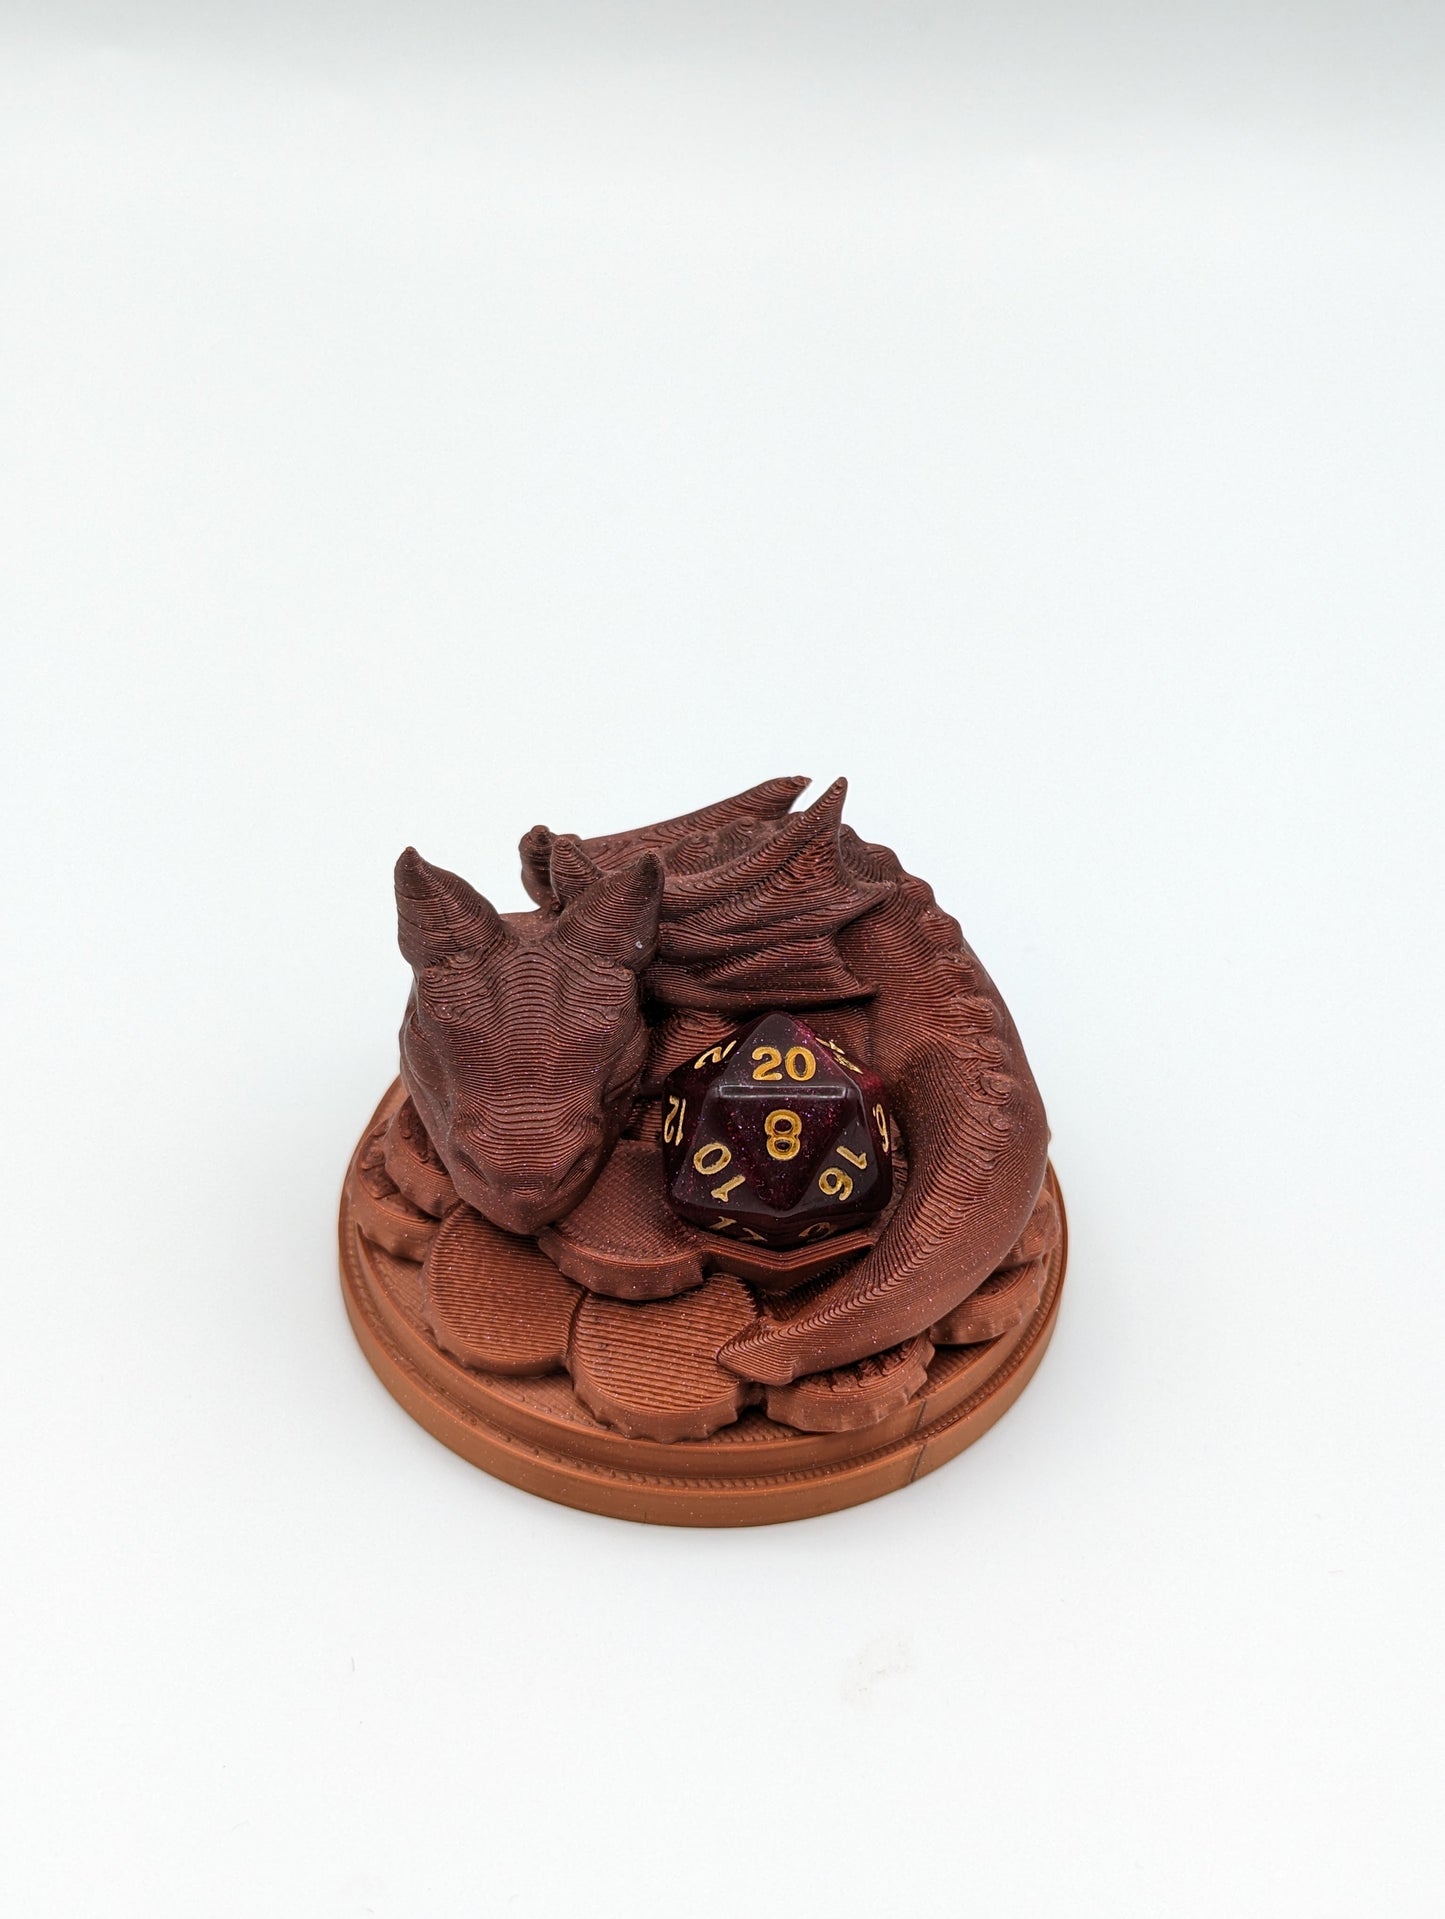 Baby Dragon Dice Guardian - 3D Printed